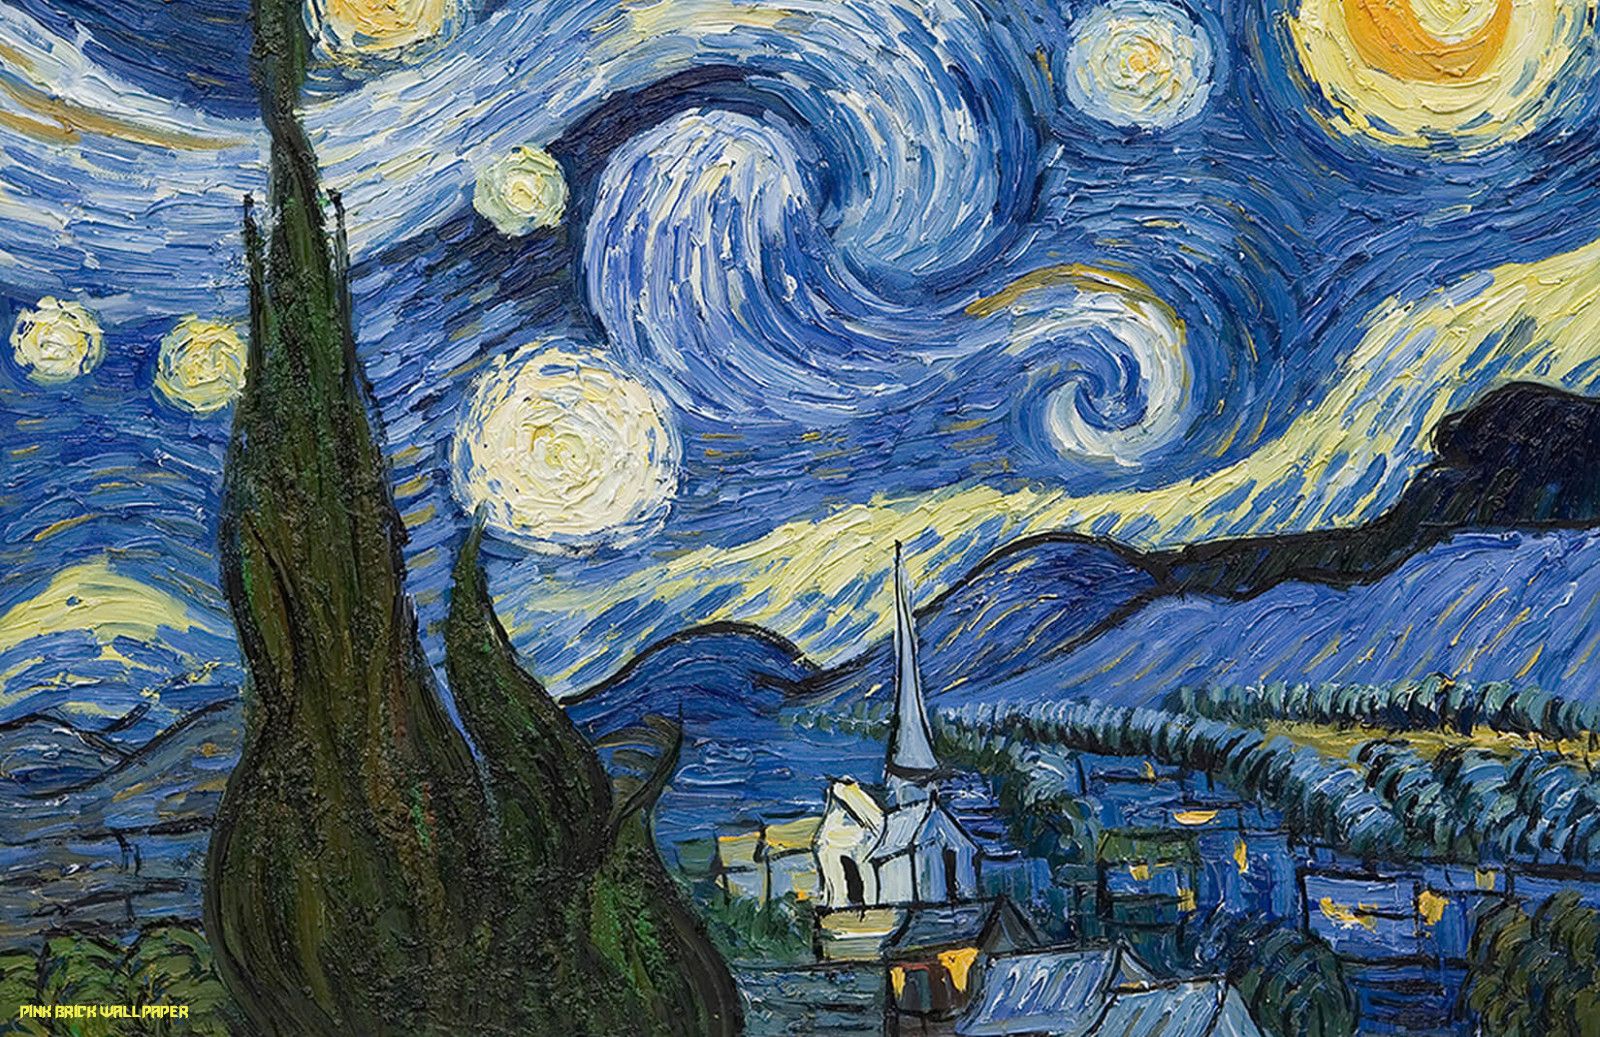 Starry Night by Van Gogh Wallpaper Mural. MuralsWallpaper